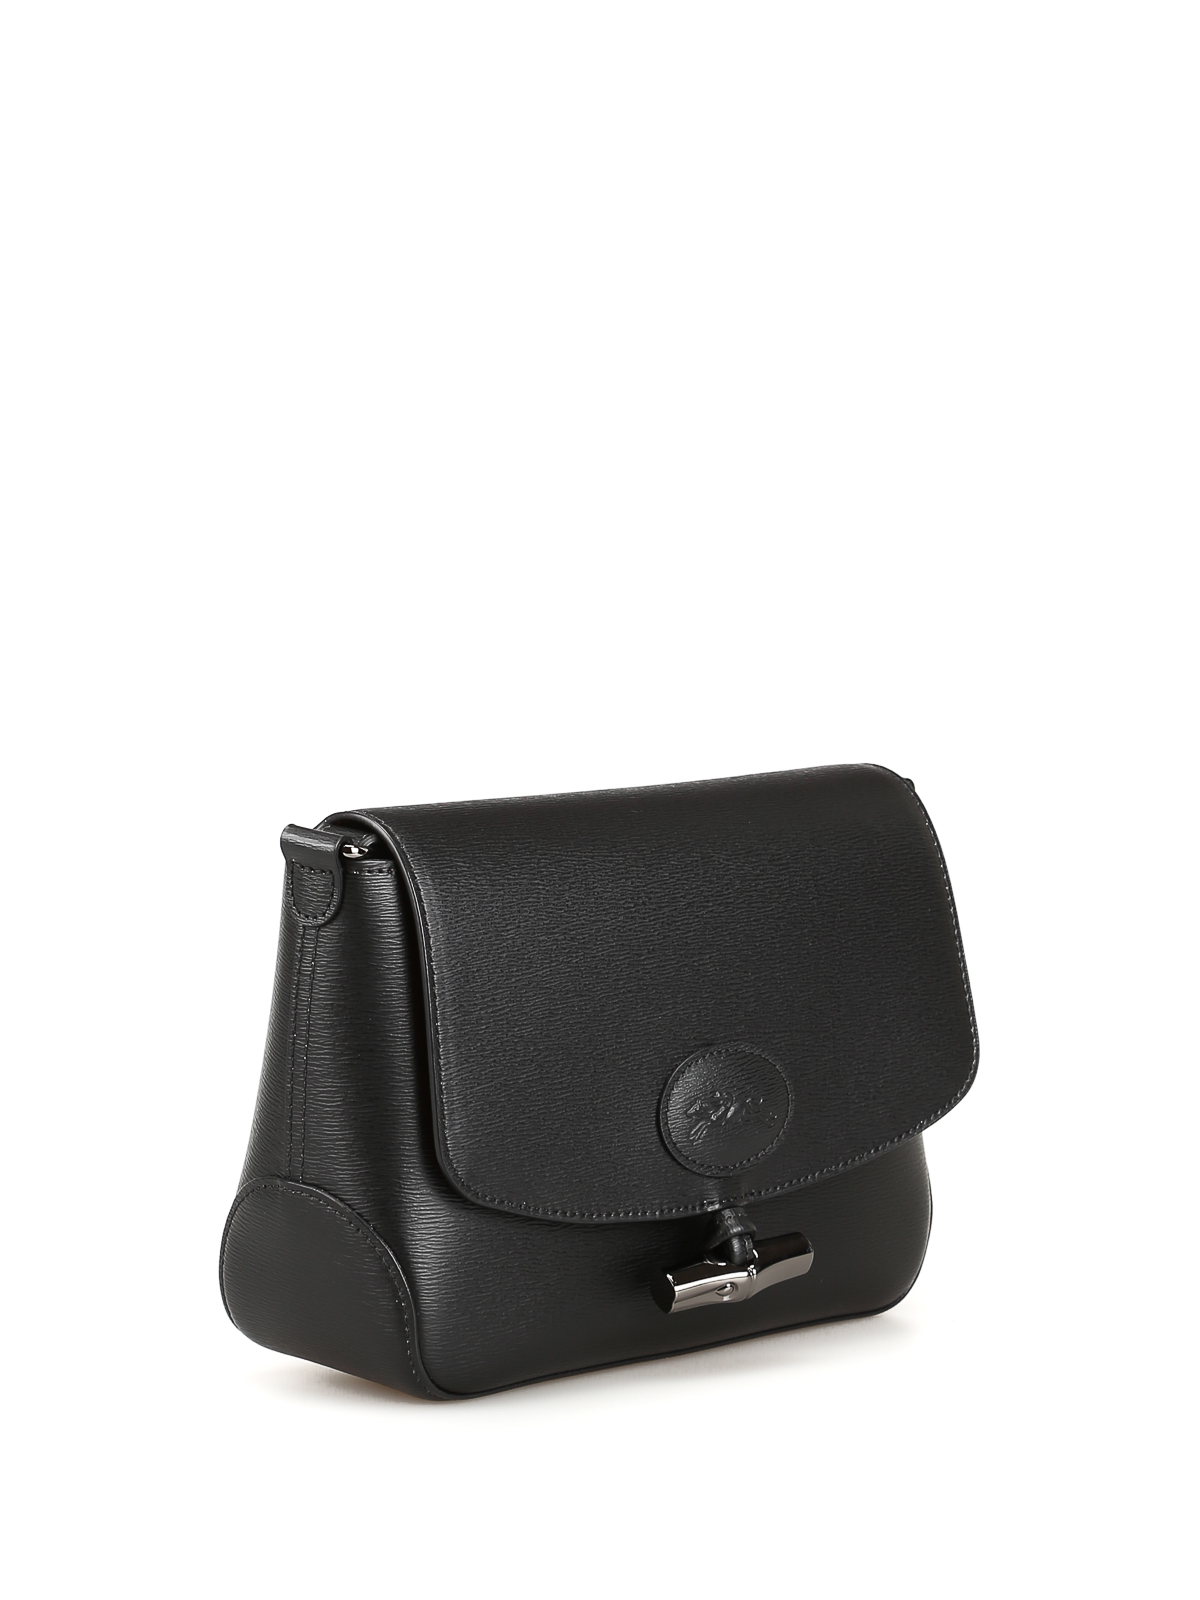 Longchamp Black Small Leather Roseau Satchel